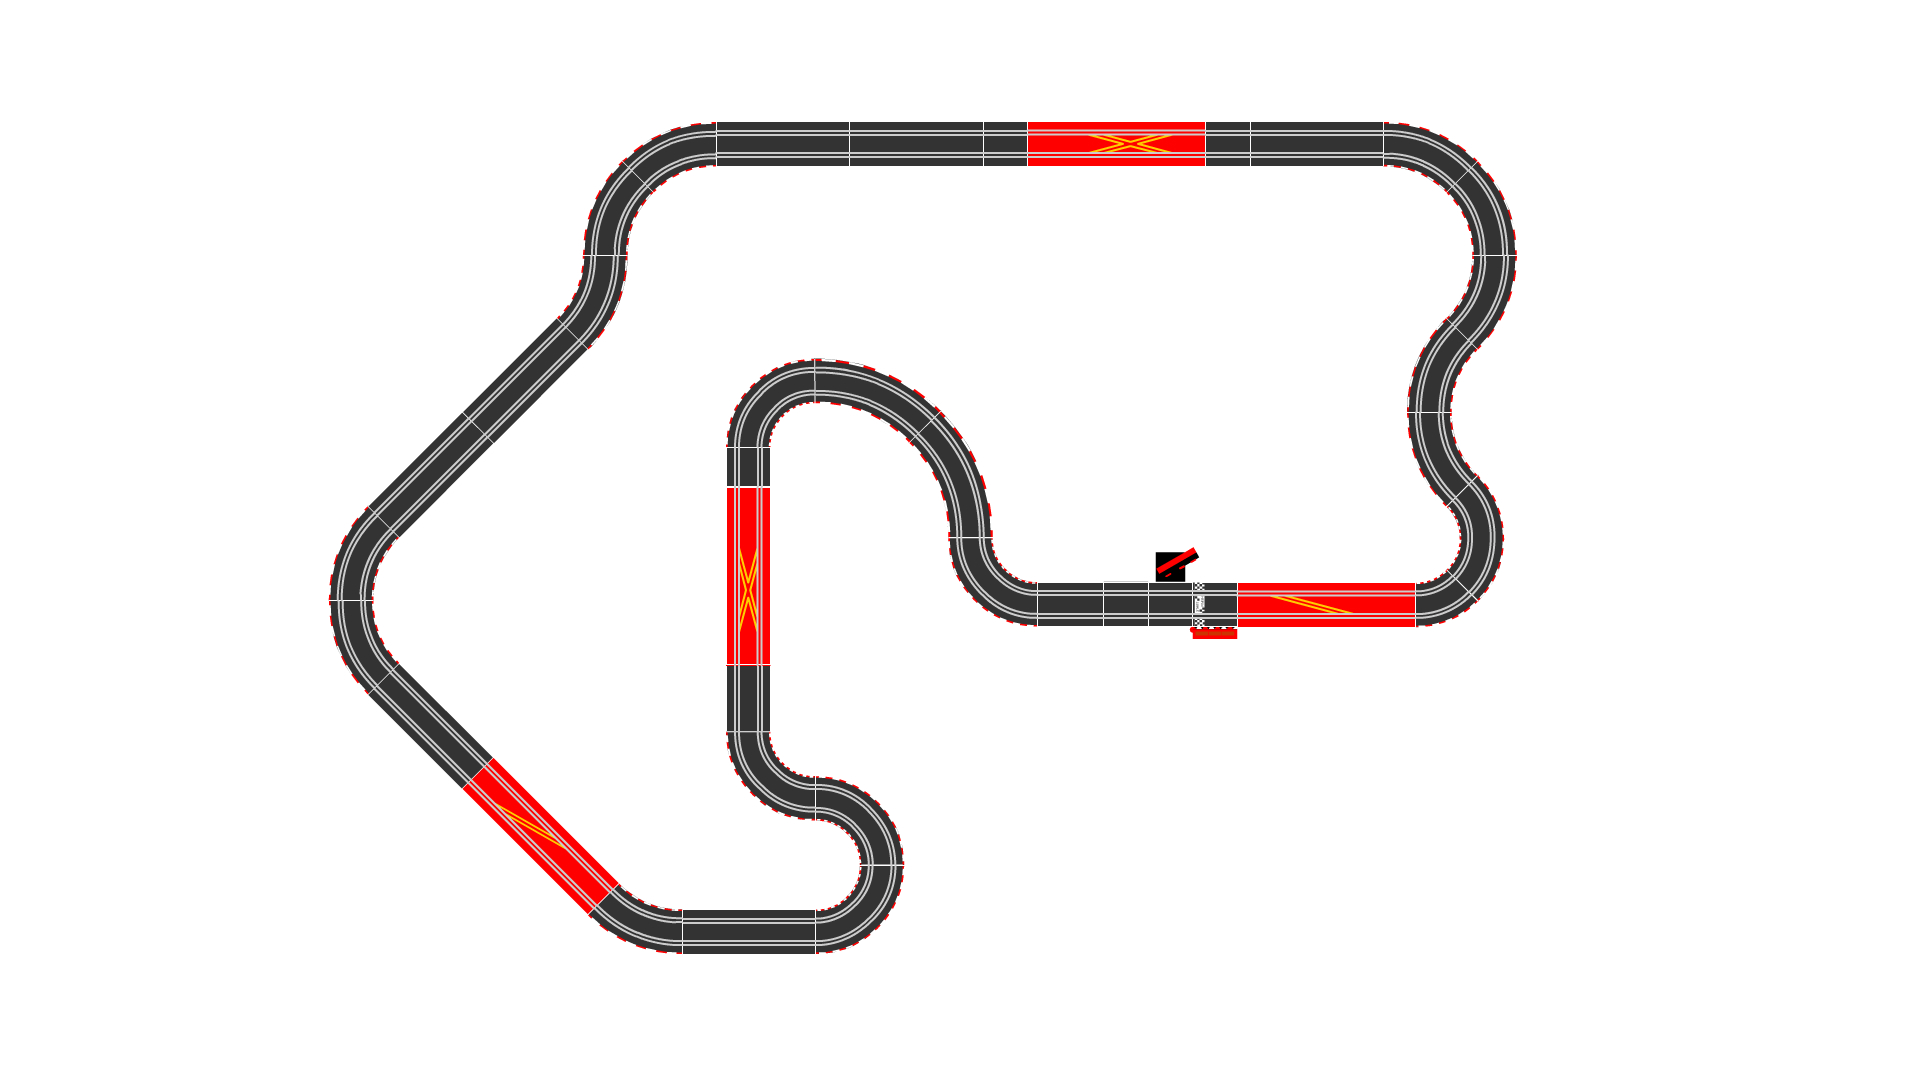 Silverstone Circuit - D143 Racing